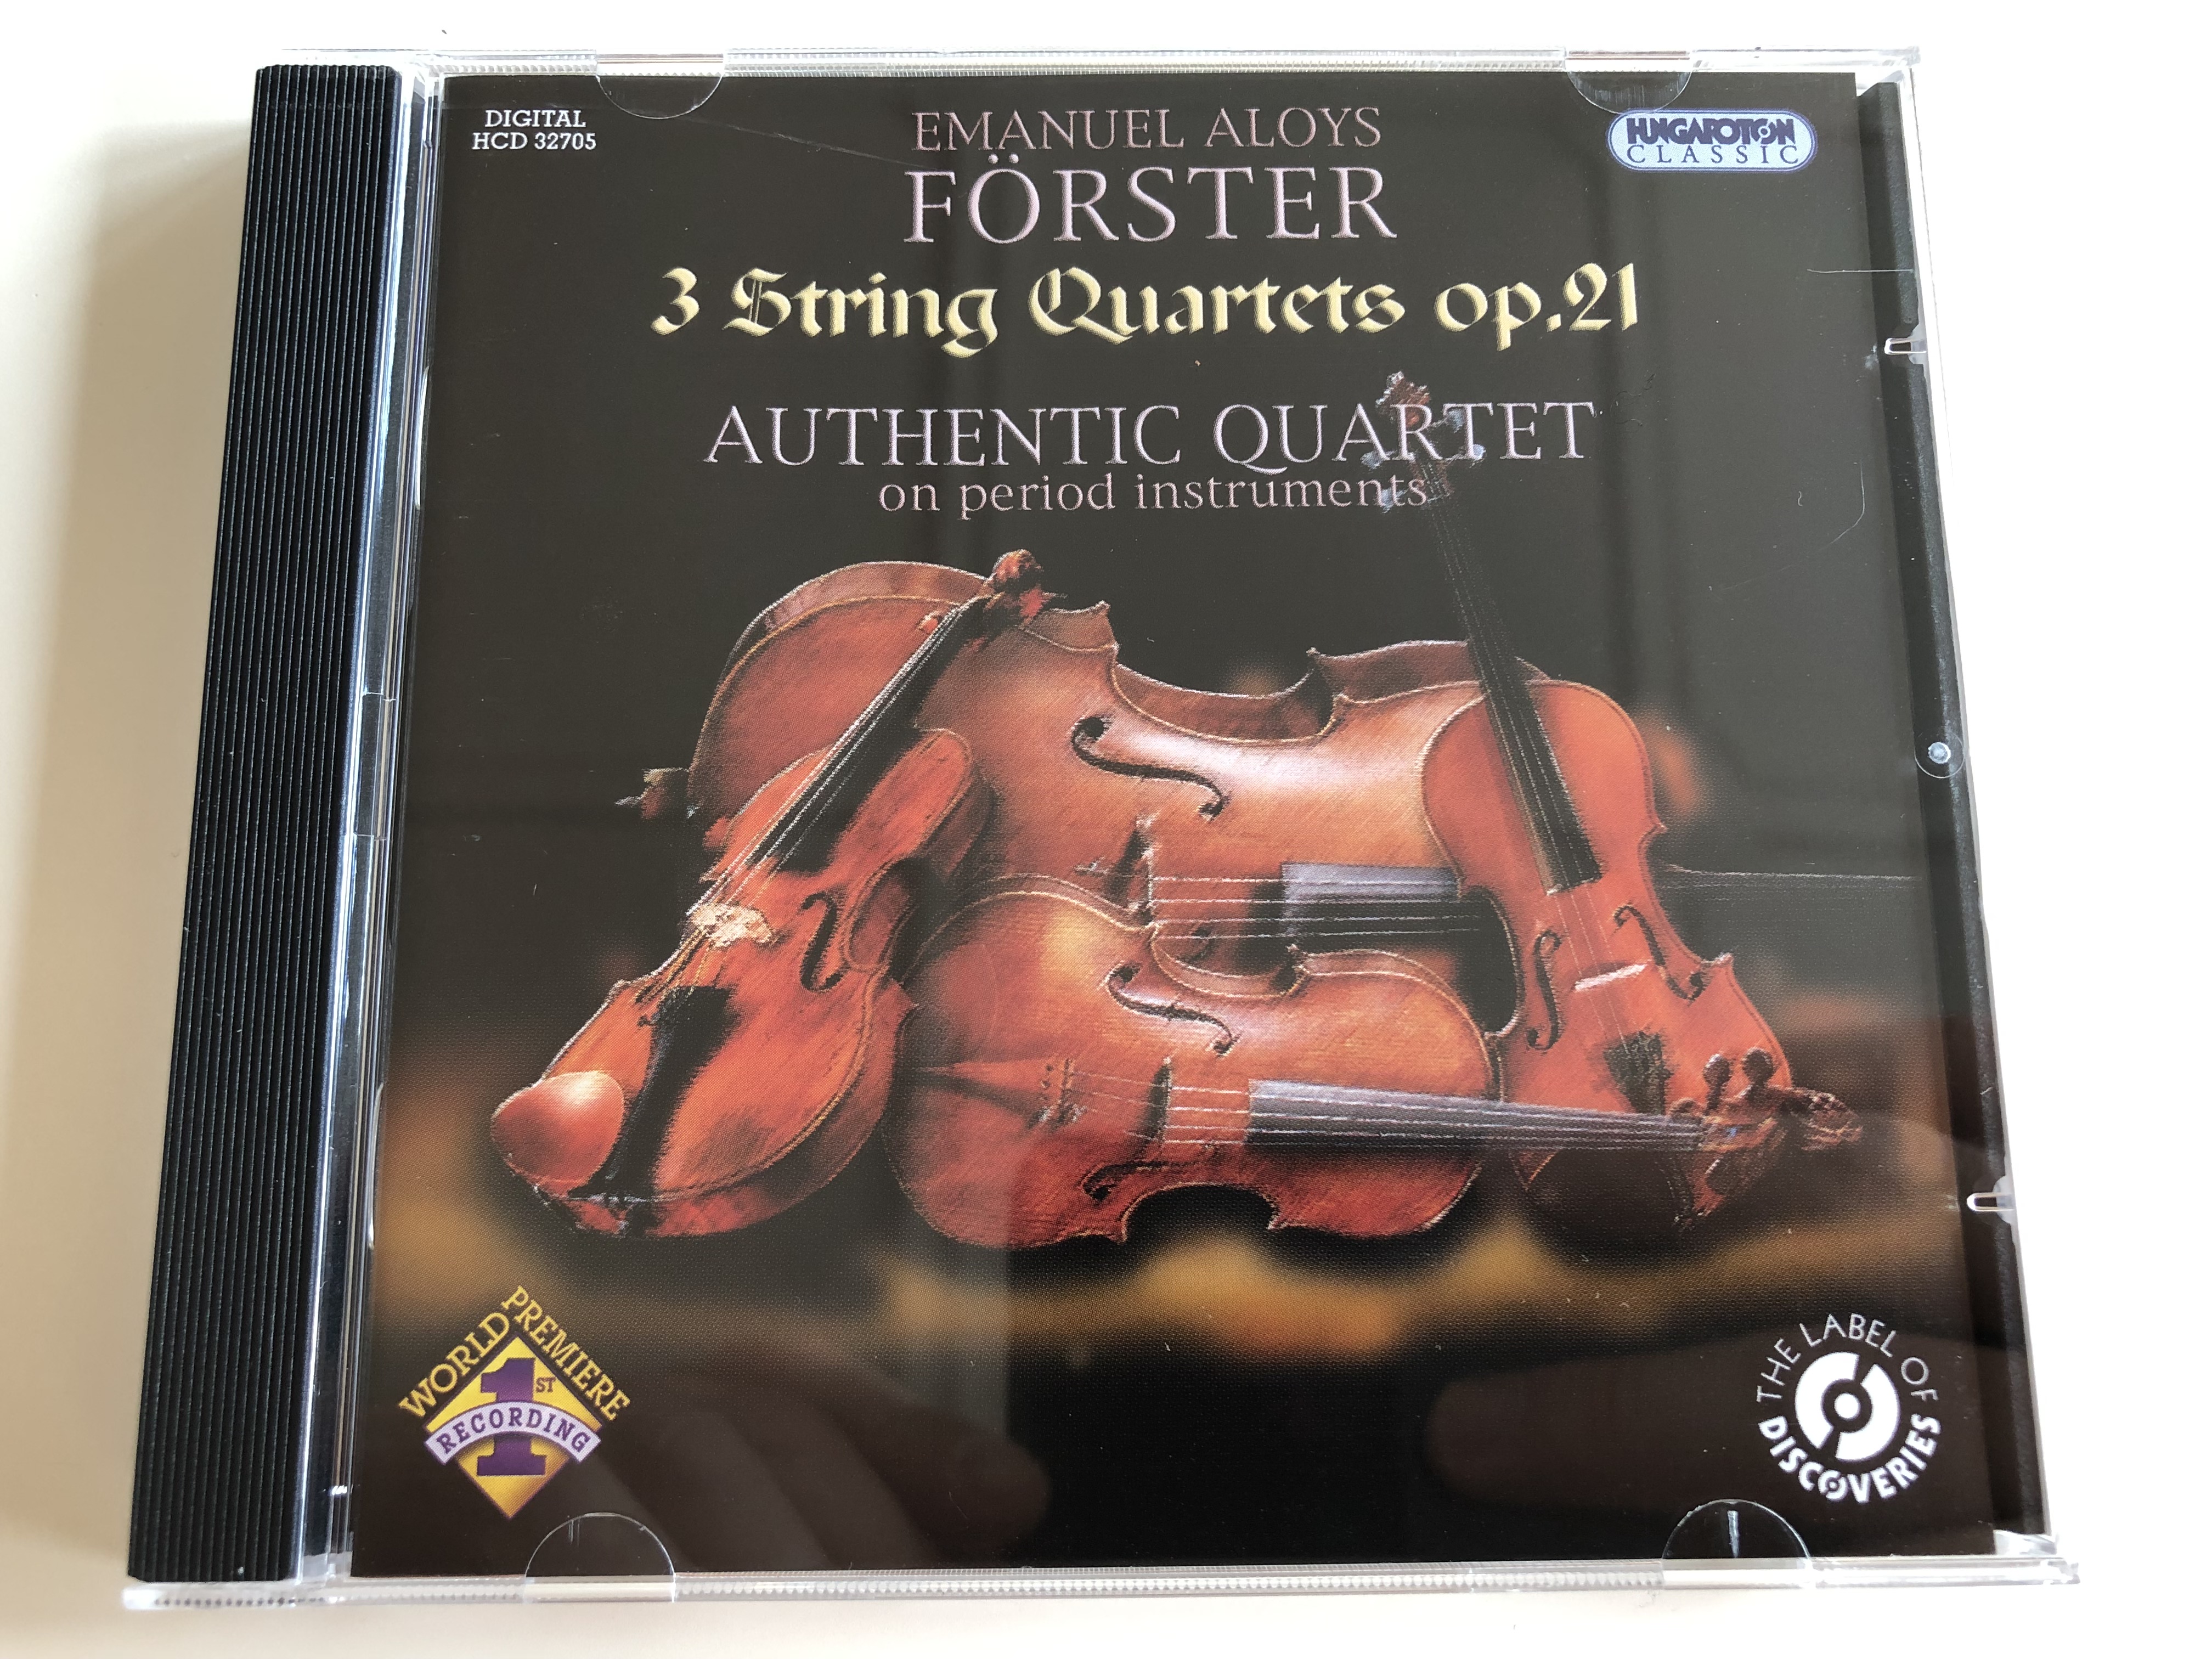 emanuel-aloys-forster-3-string-quartets-op.21-authentic-quartet-on-period-instruments-hungaroton-classic-audio-cd-2011-stereo-hcd-32705-1-.jpg